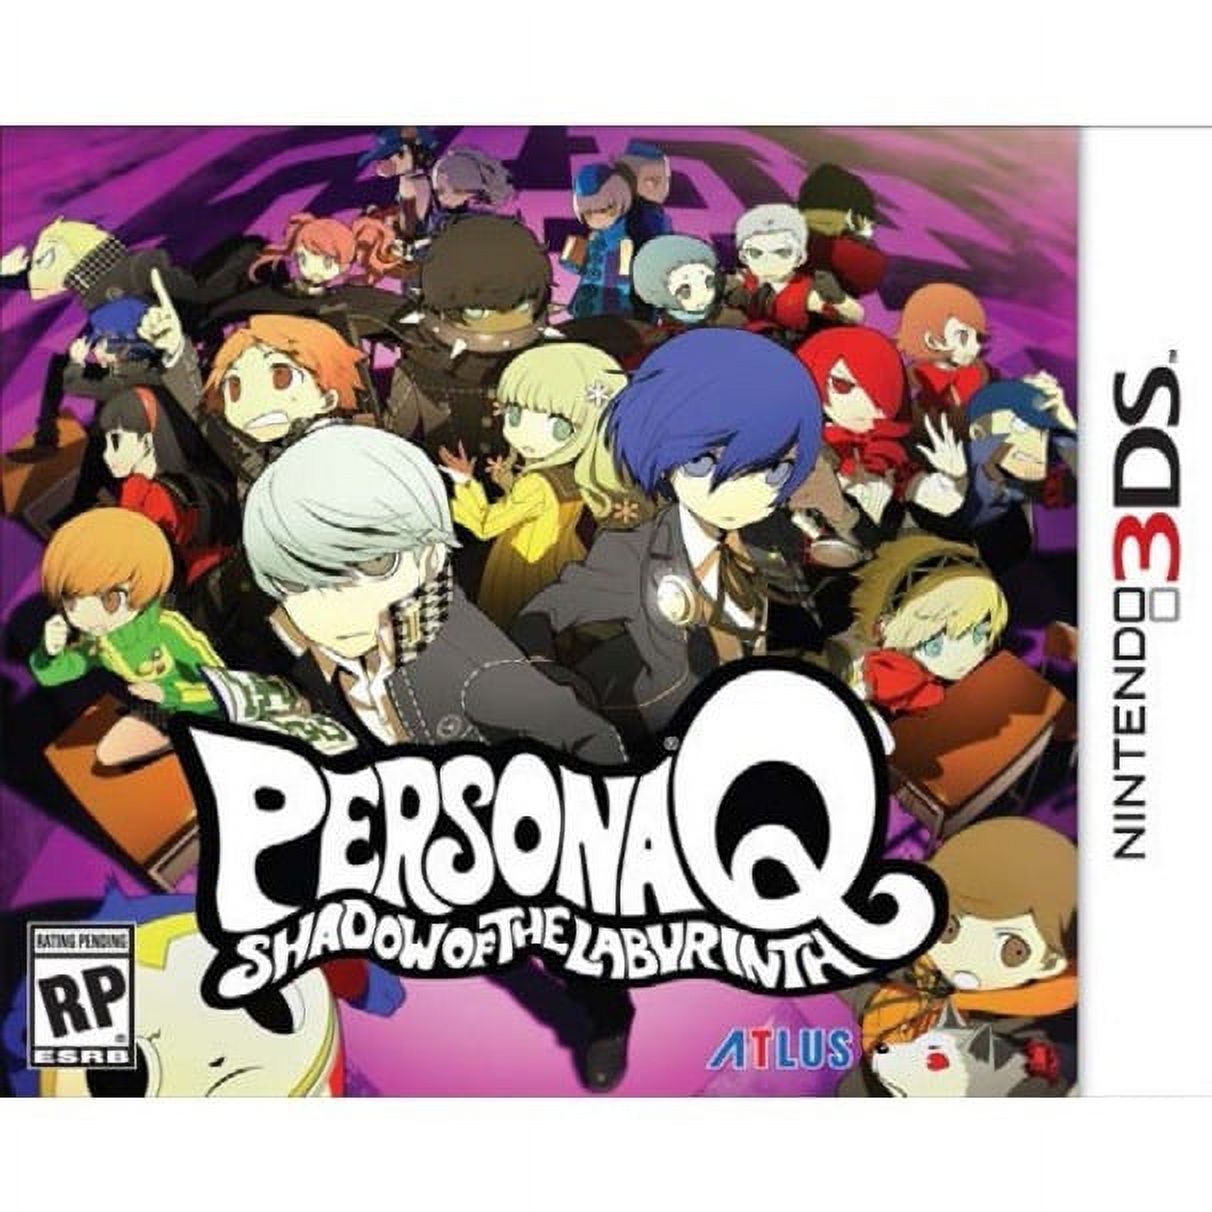 Persona Q: Shadow of the Labyrinth: Wild Cards Premium Edition, SEGA/Atlus, Nintendo 3DS, 00730865300181 - image 1 of 17